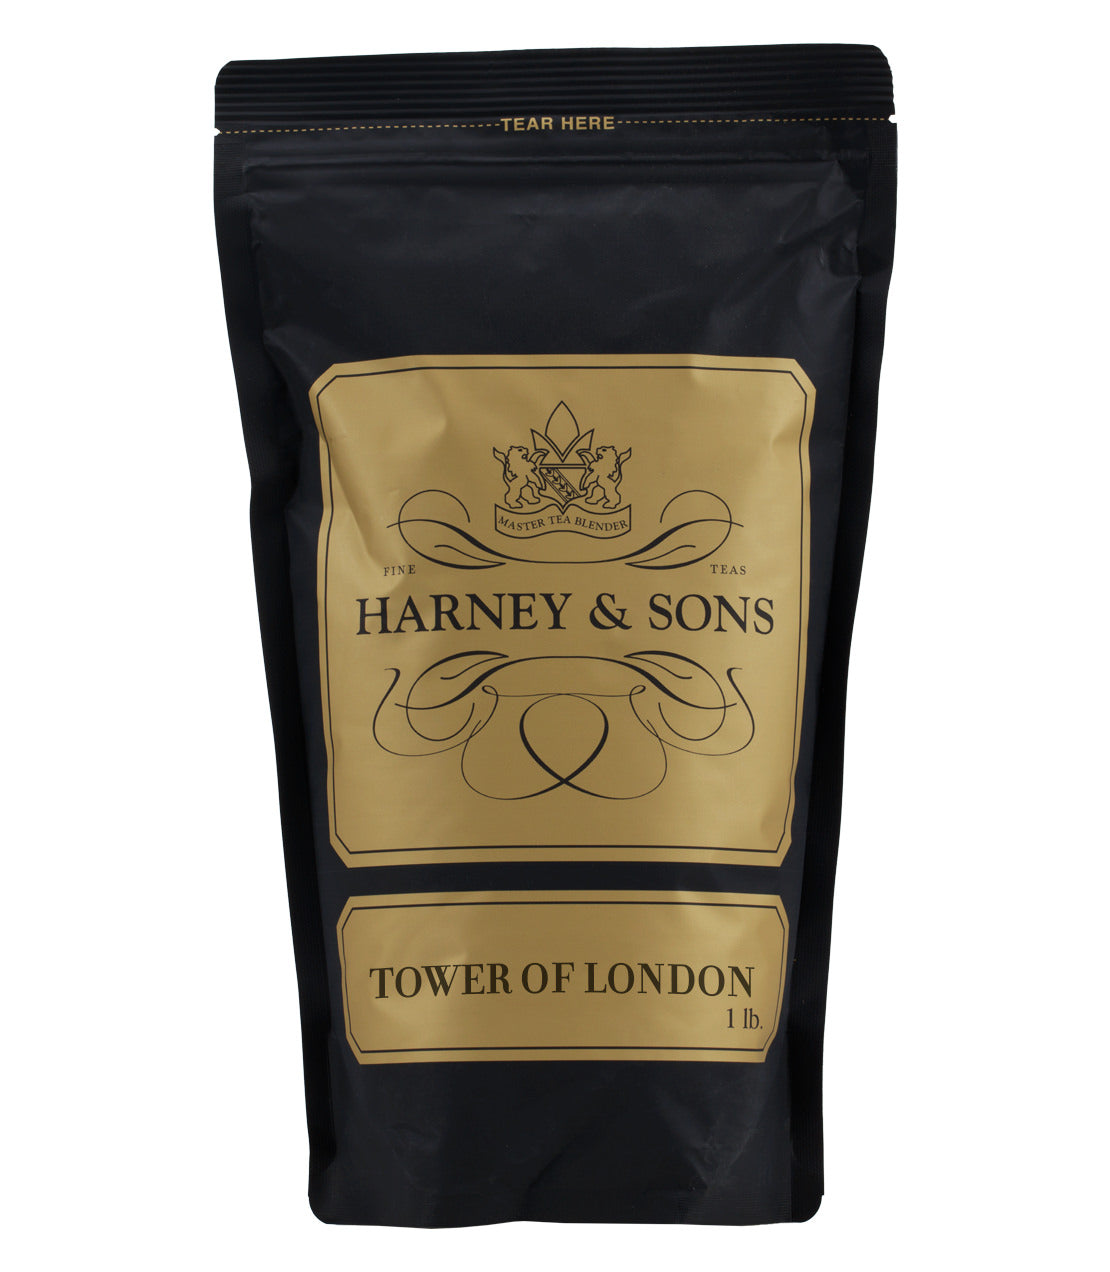 Tower of London - Loose 1 lb. Bag - Harney & Sons Fine Teas